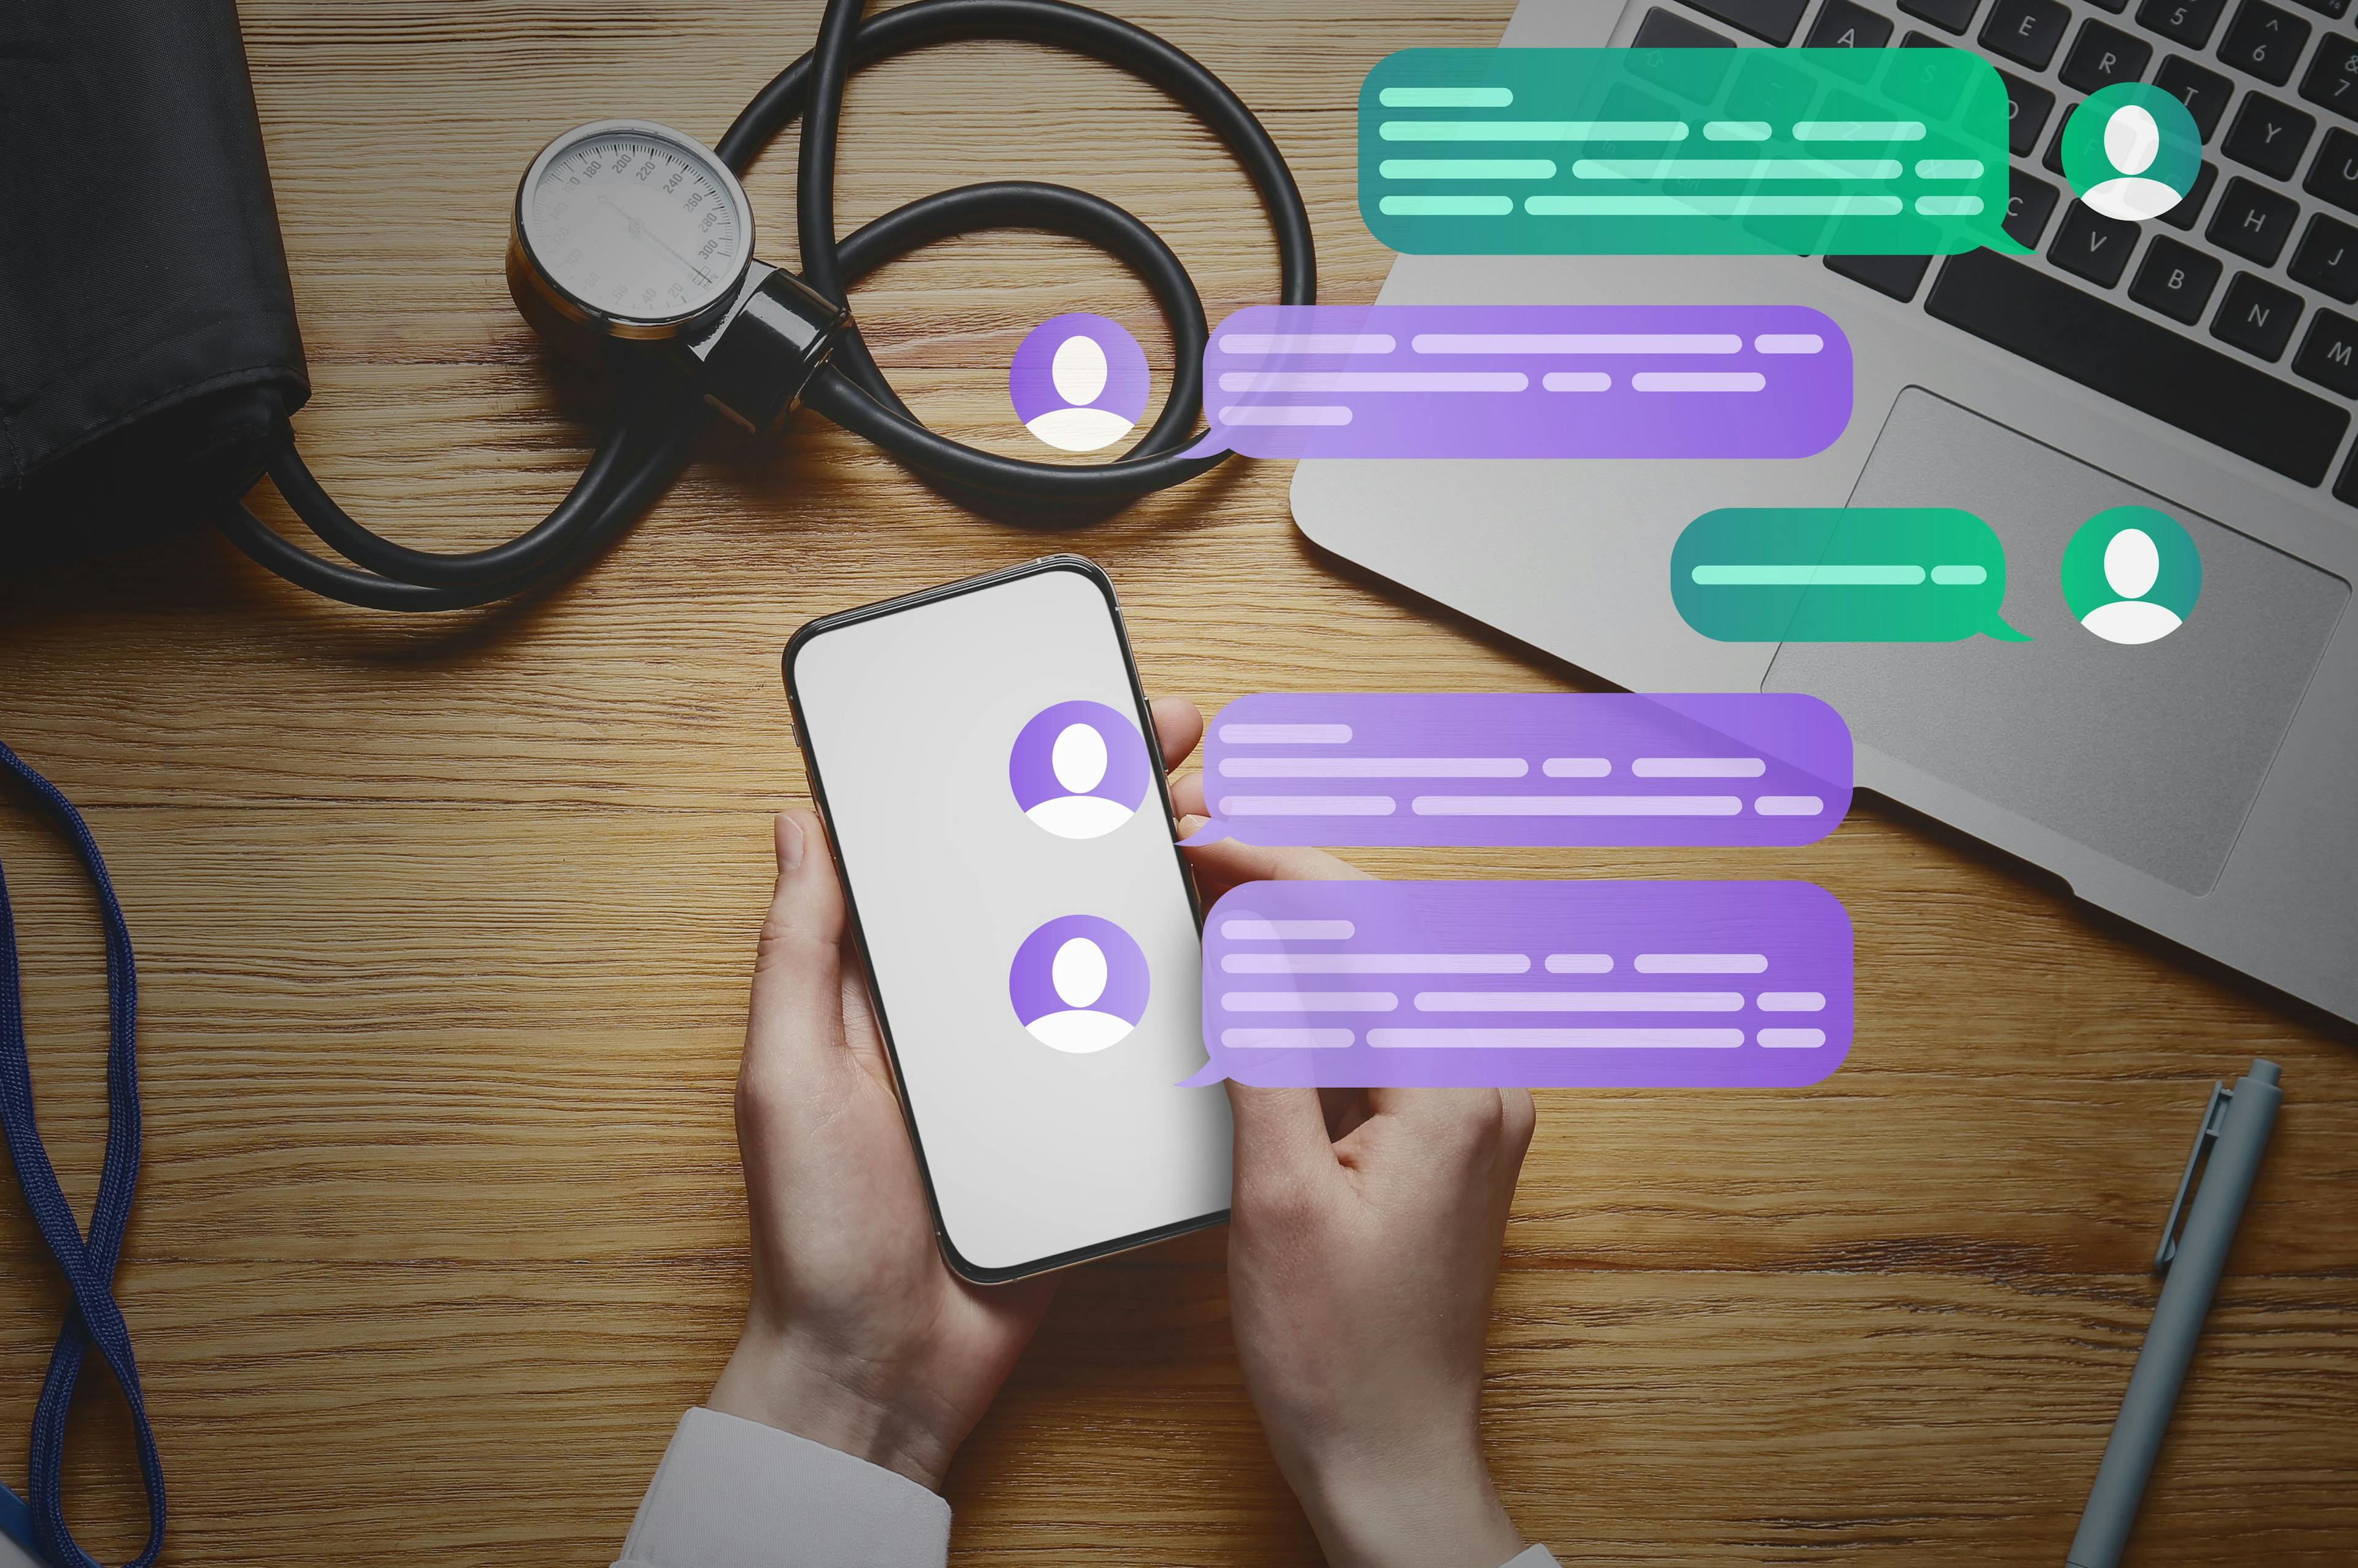 AI can help respond t patient messaging: ©Pixel_Shot - stock.adobe.com